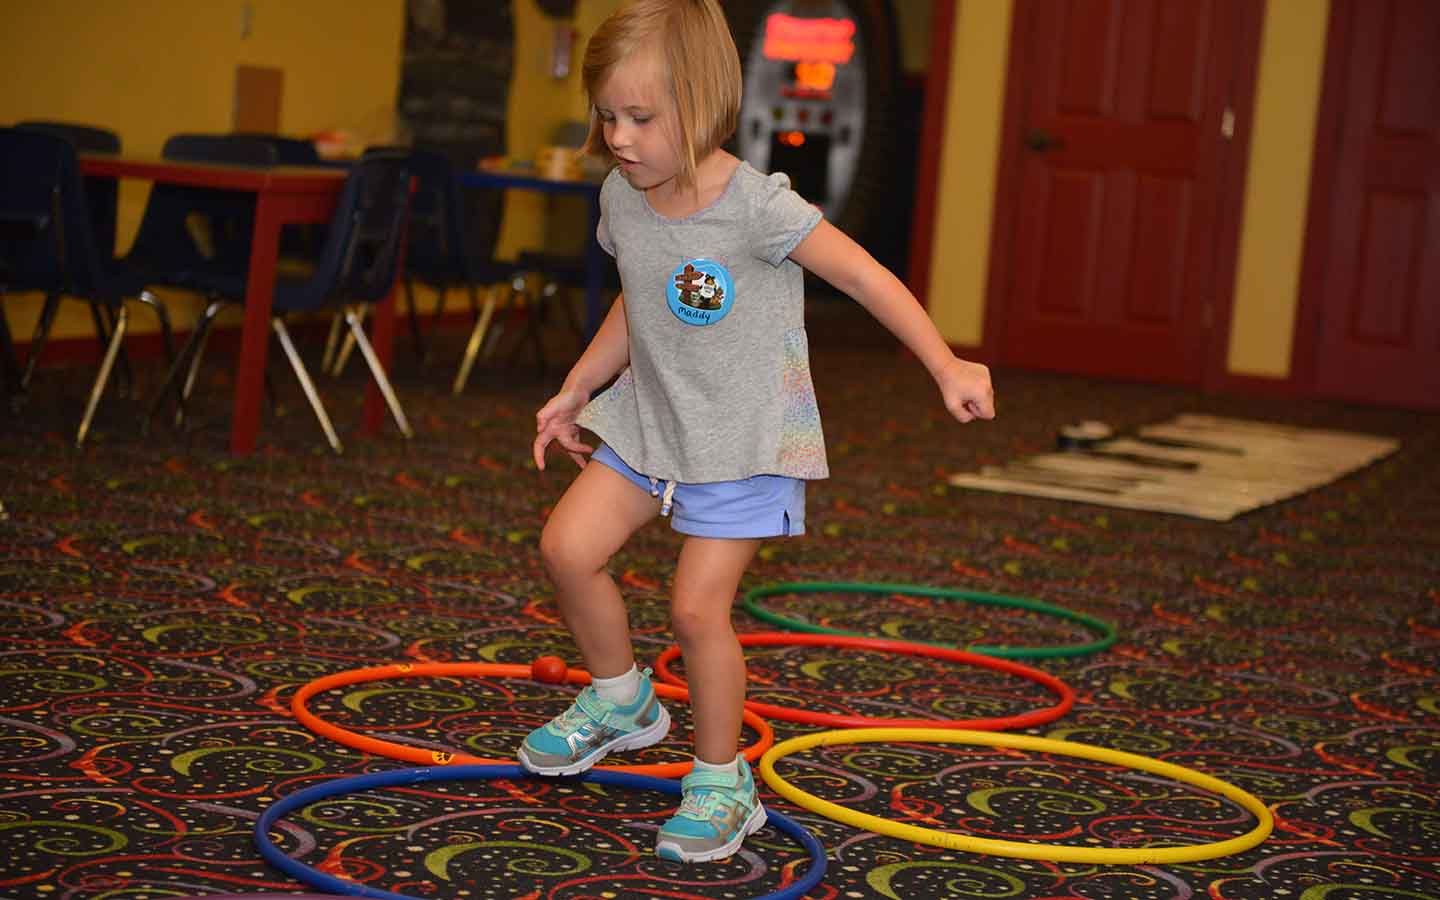 Young girl running through hula hoops on floor.